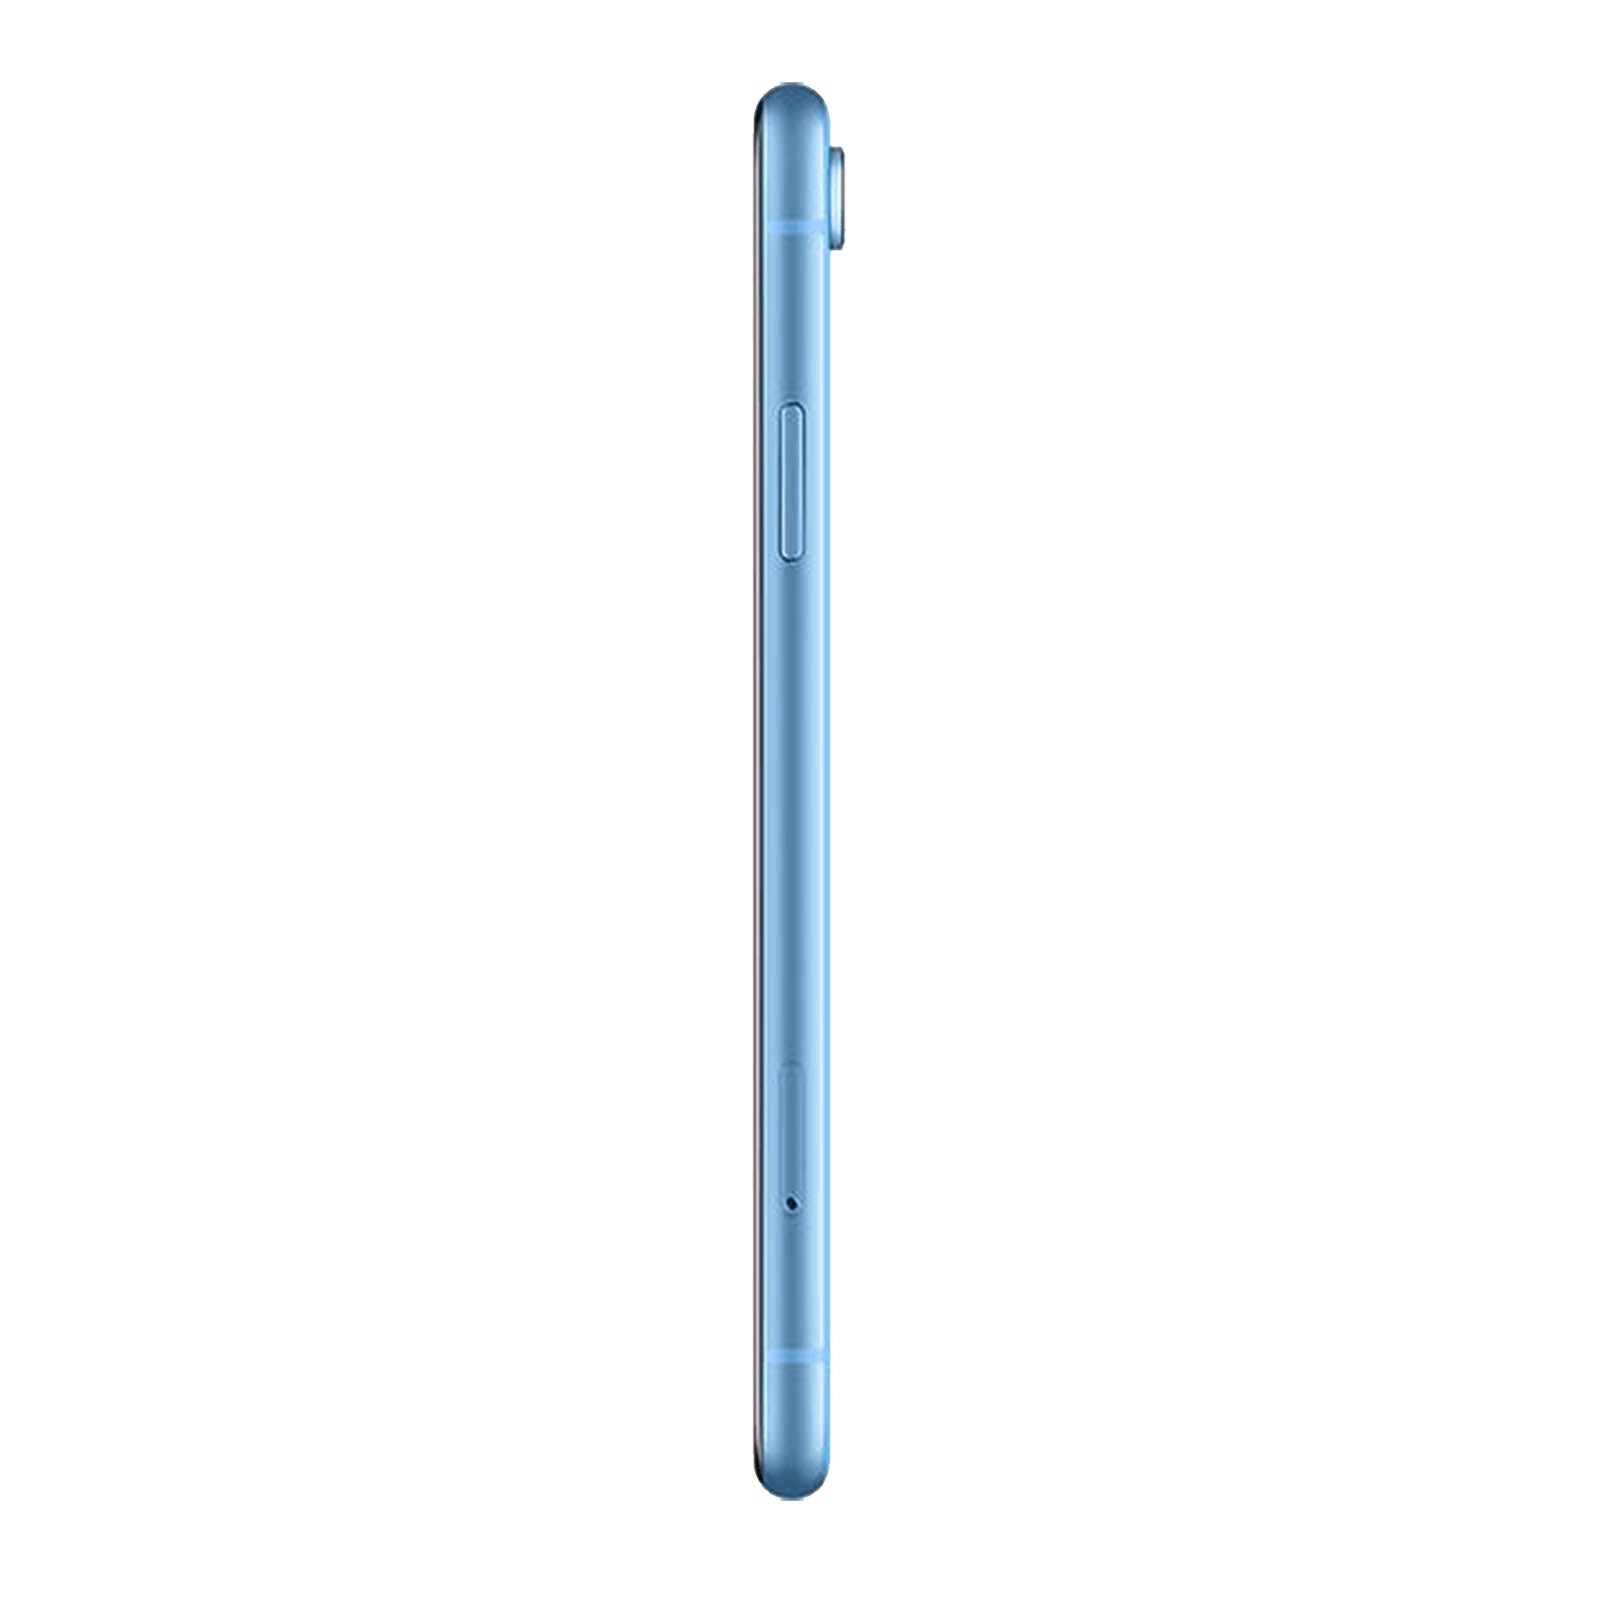 Apple iPhone XR 256GB Blue Good - Sprint